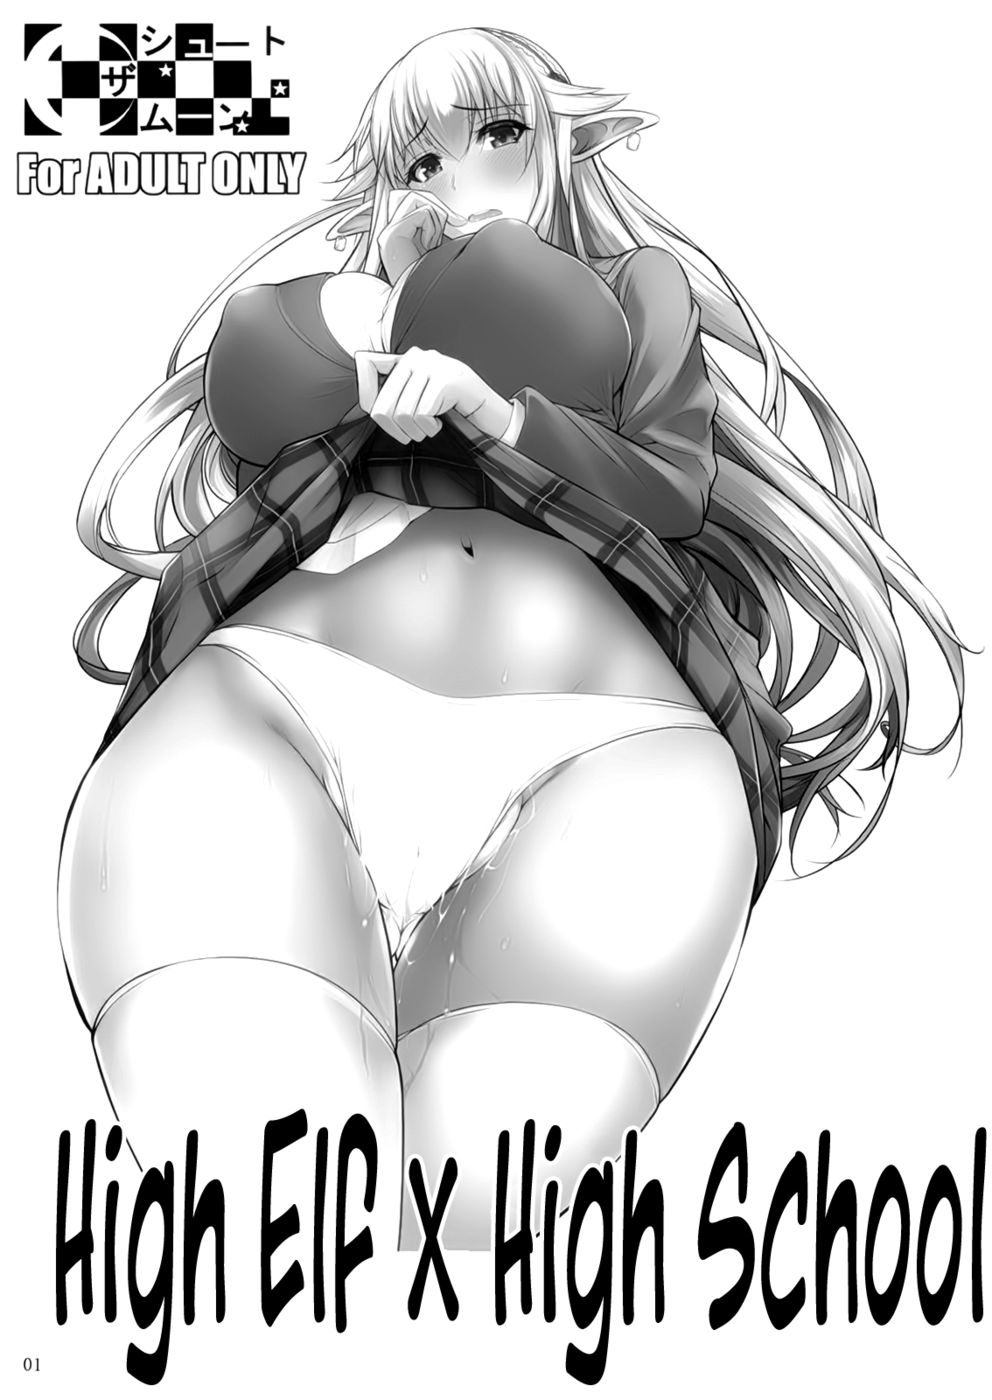 Hentai Manga Comic-High Elf x High School-Read-2